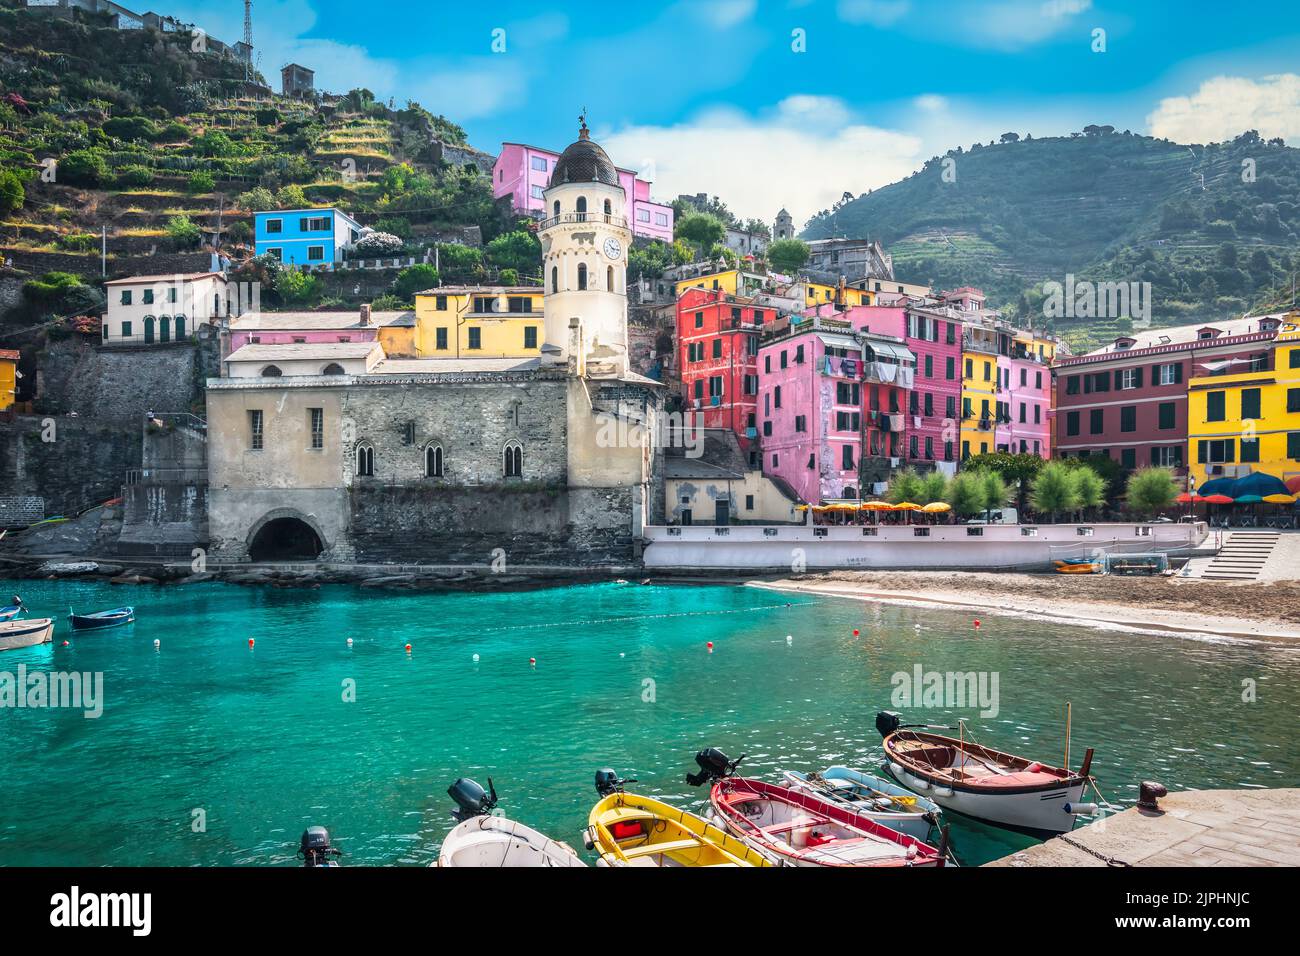 Vernazza village, Cinque Terre, Italy. Beautiful harbor bay with colorful buildings at the coastline. Stock Photo